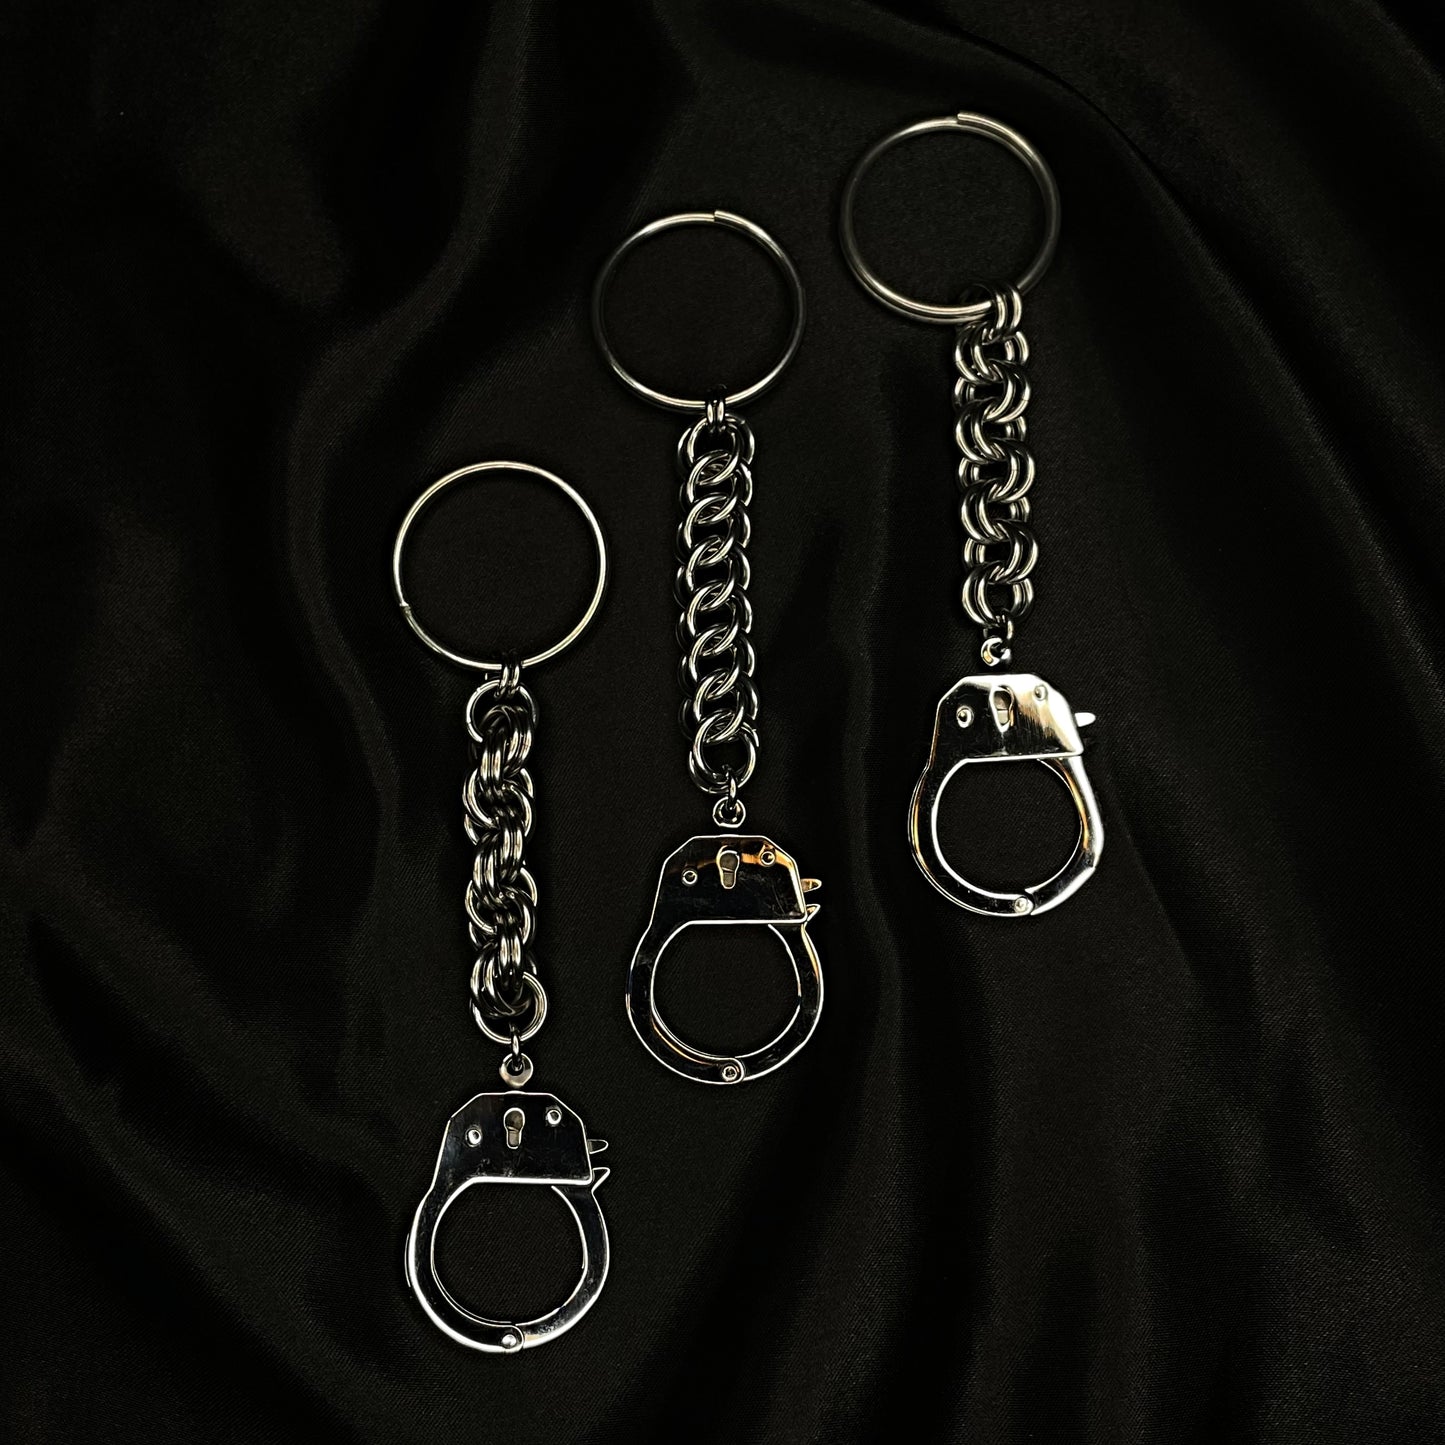 the cuff keychains